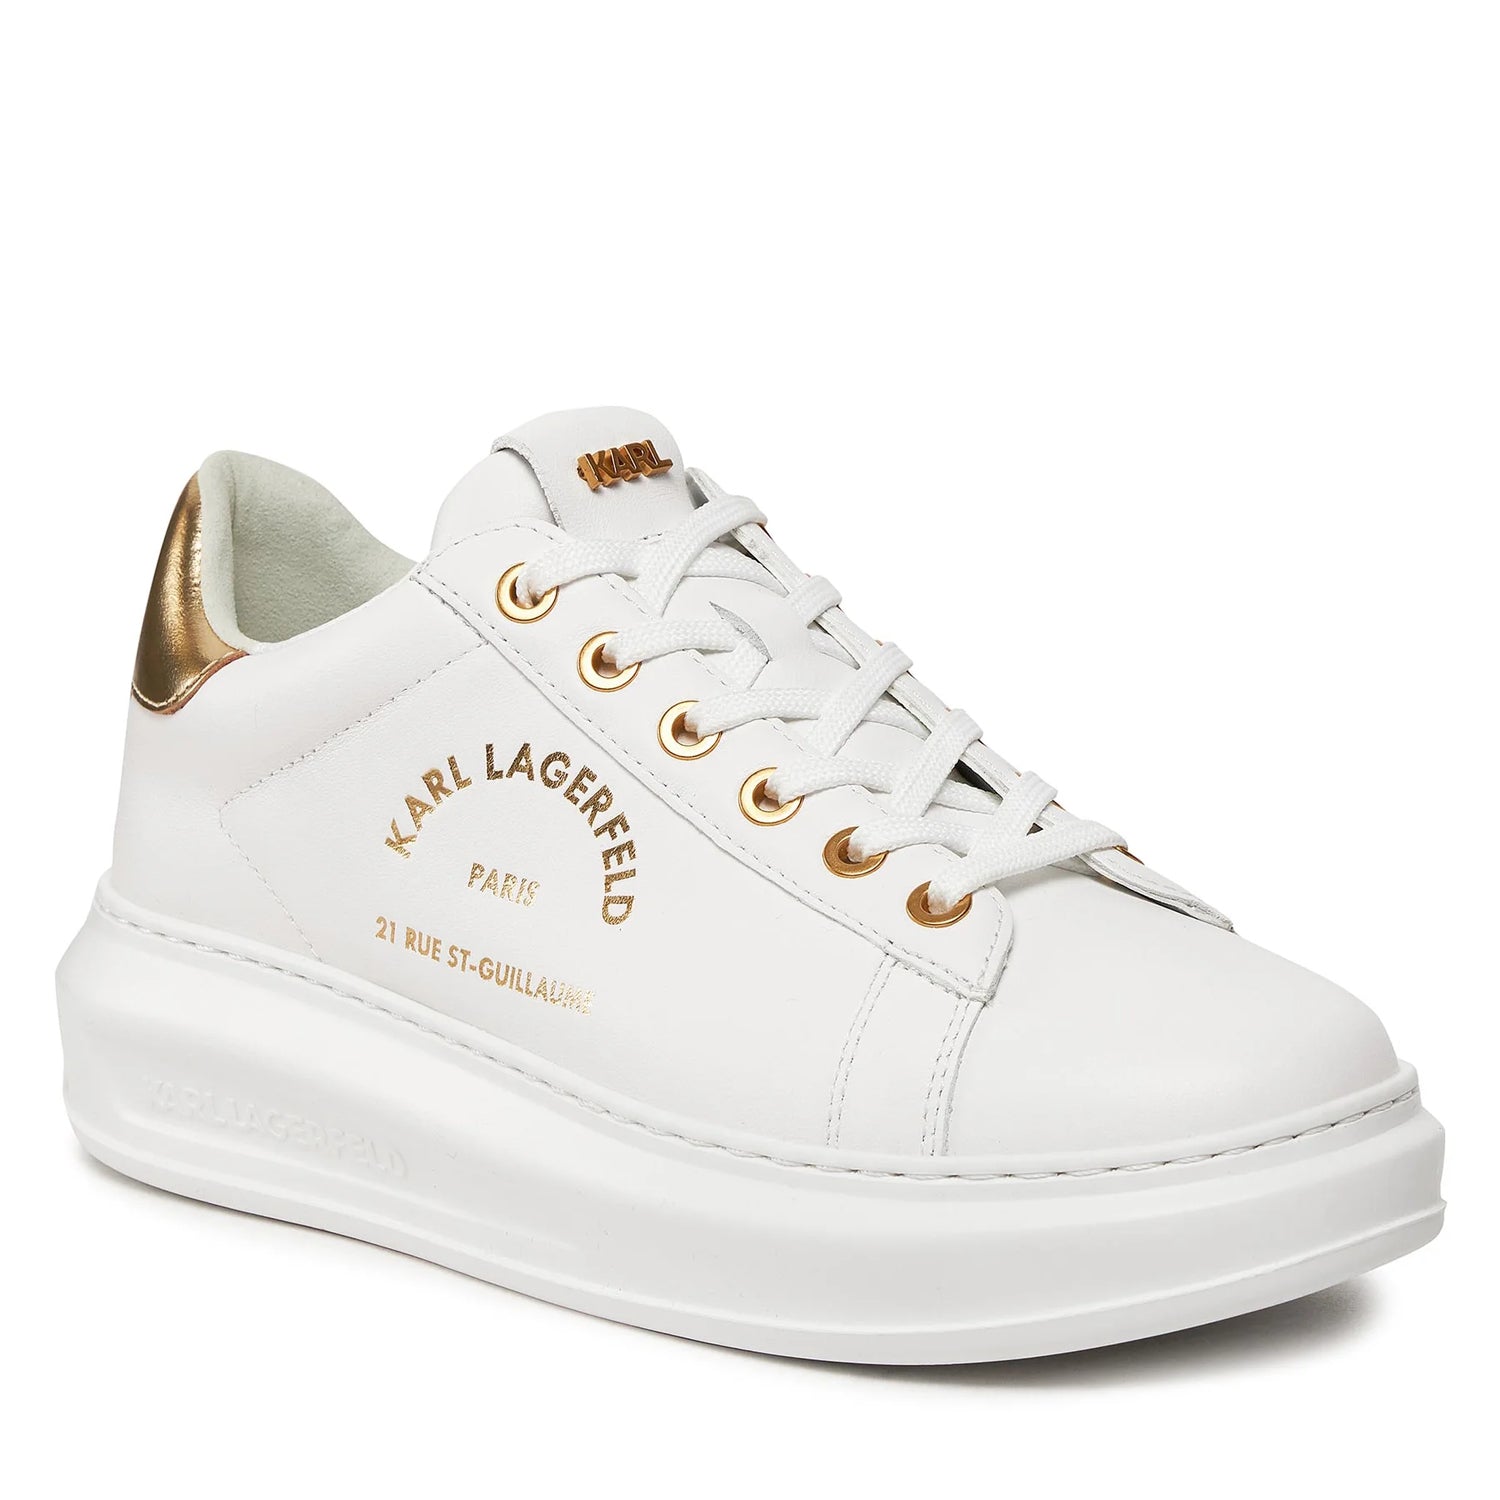 Karl Lagerfeld Sapatilhas Sneakers Shoes Kl62538 Whi Gold Branco Dourado_shot6